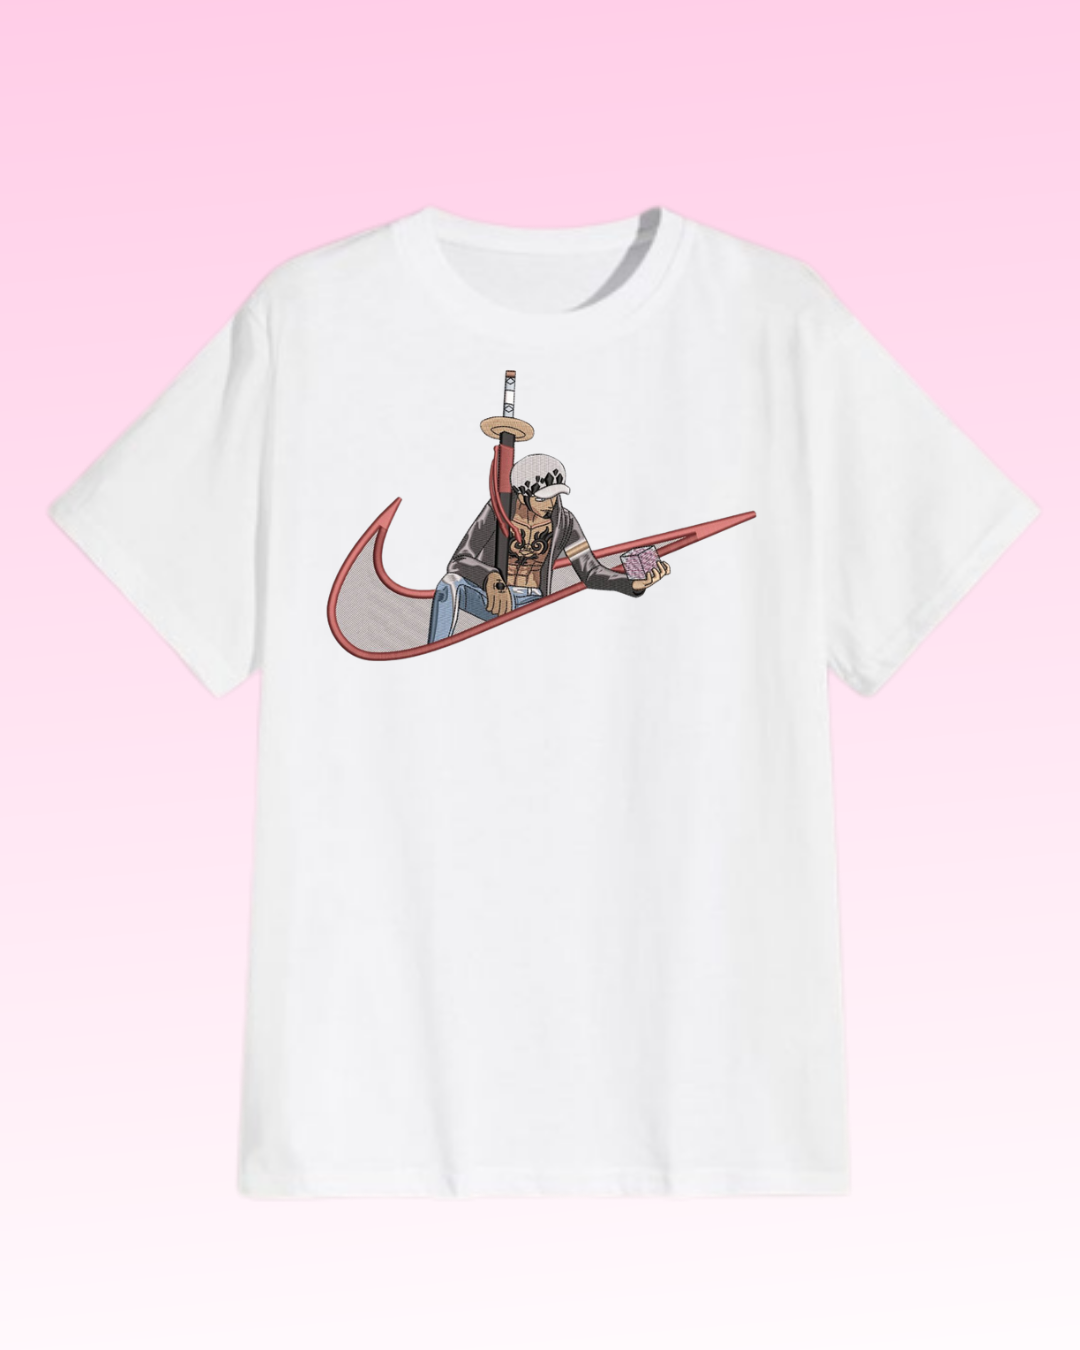 One Piece Trafalgar Law Embroidered T-Shirt